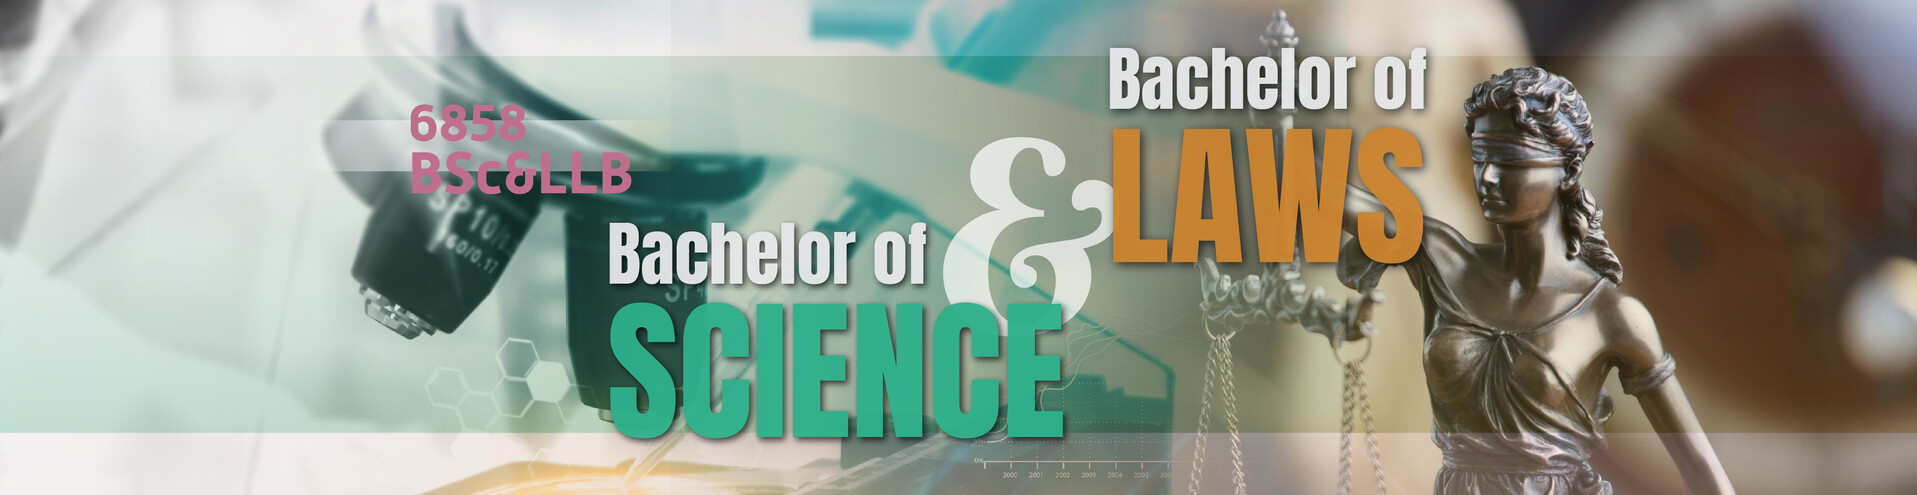 6858 Bachelor of Science & Bachelor of Laws